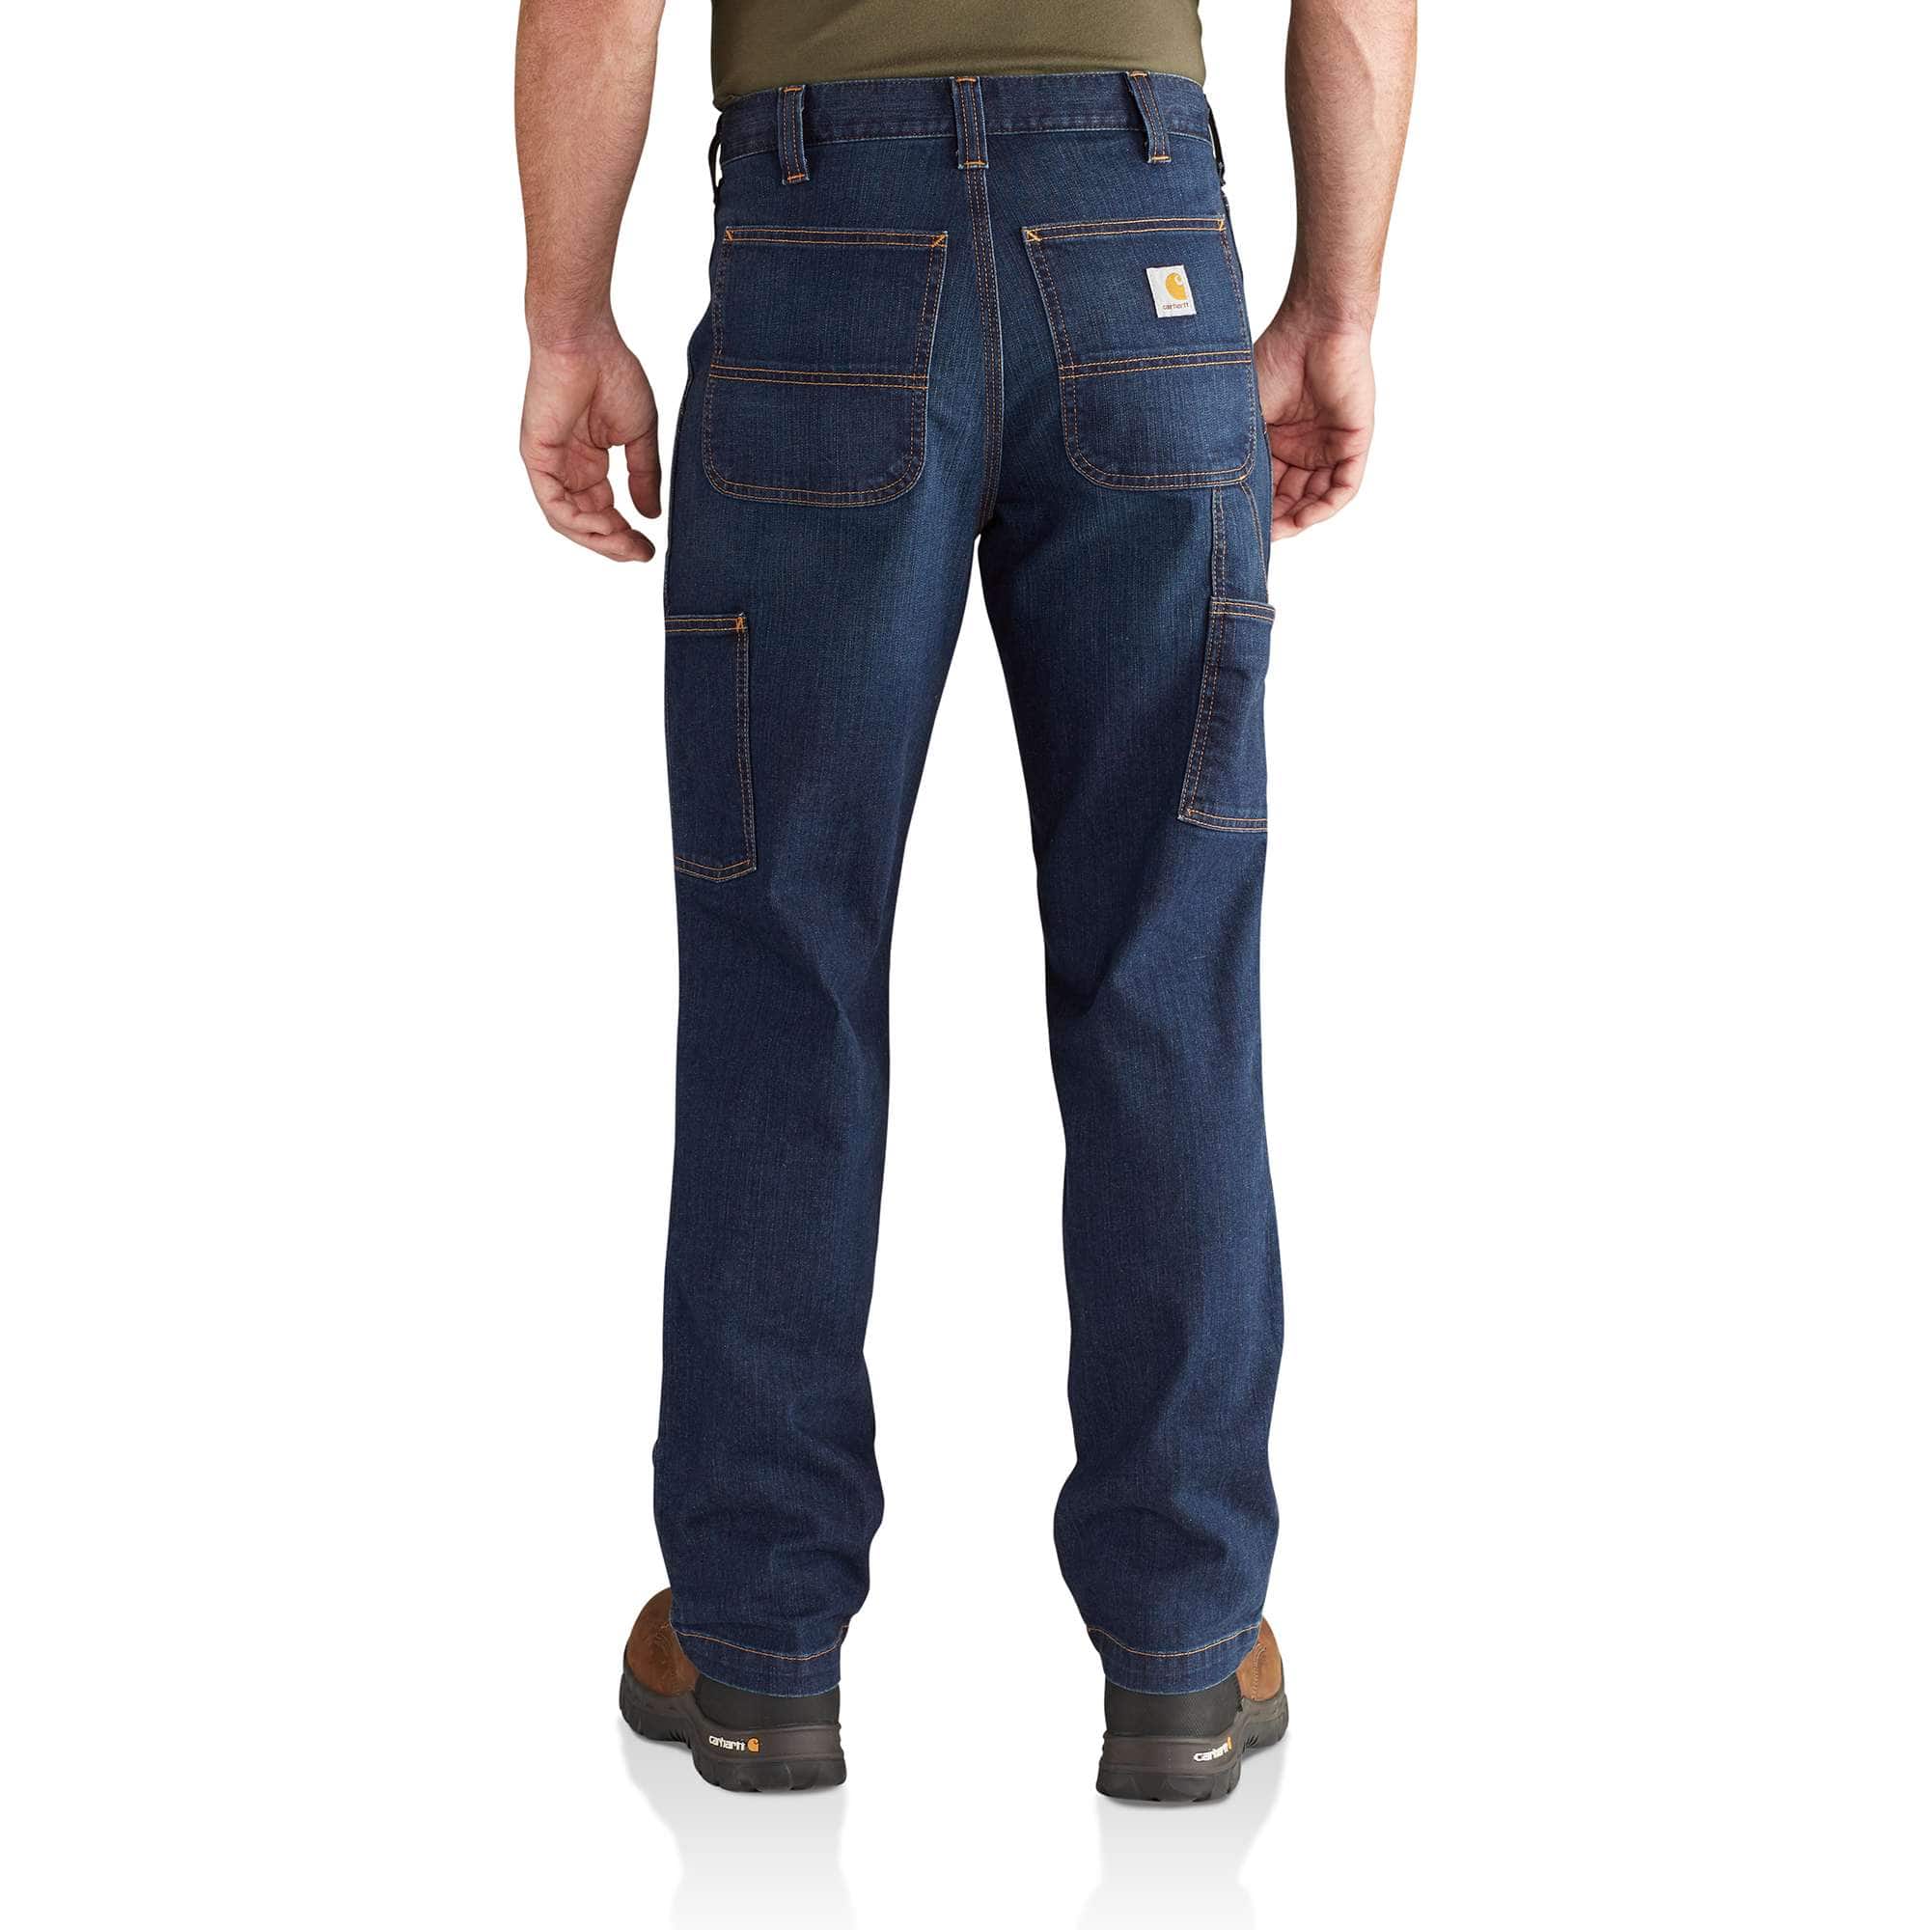 carhartt utility jeans